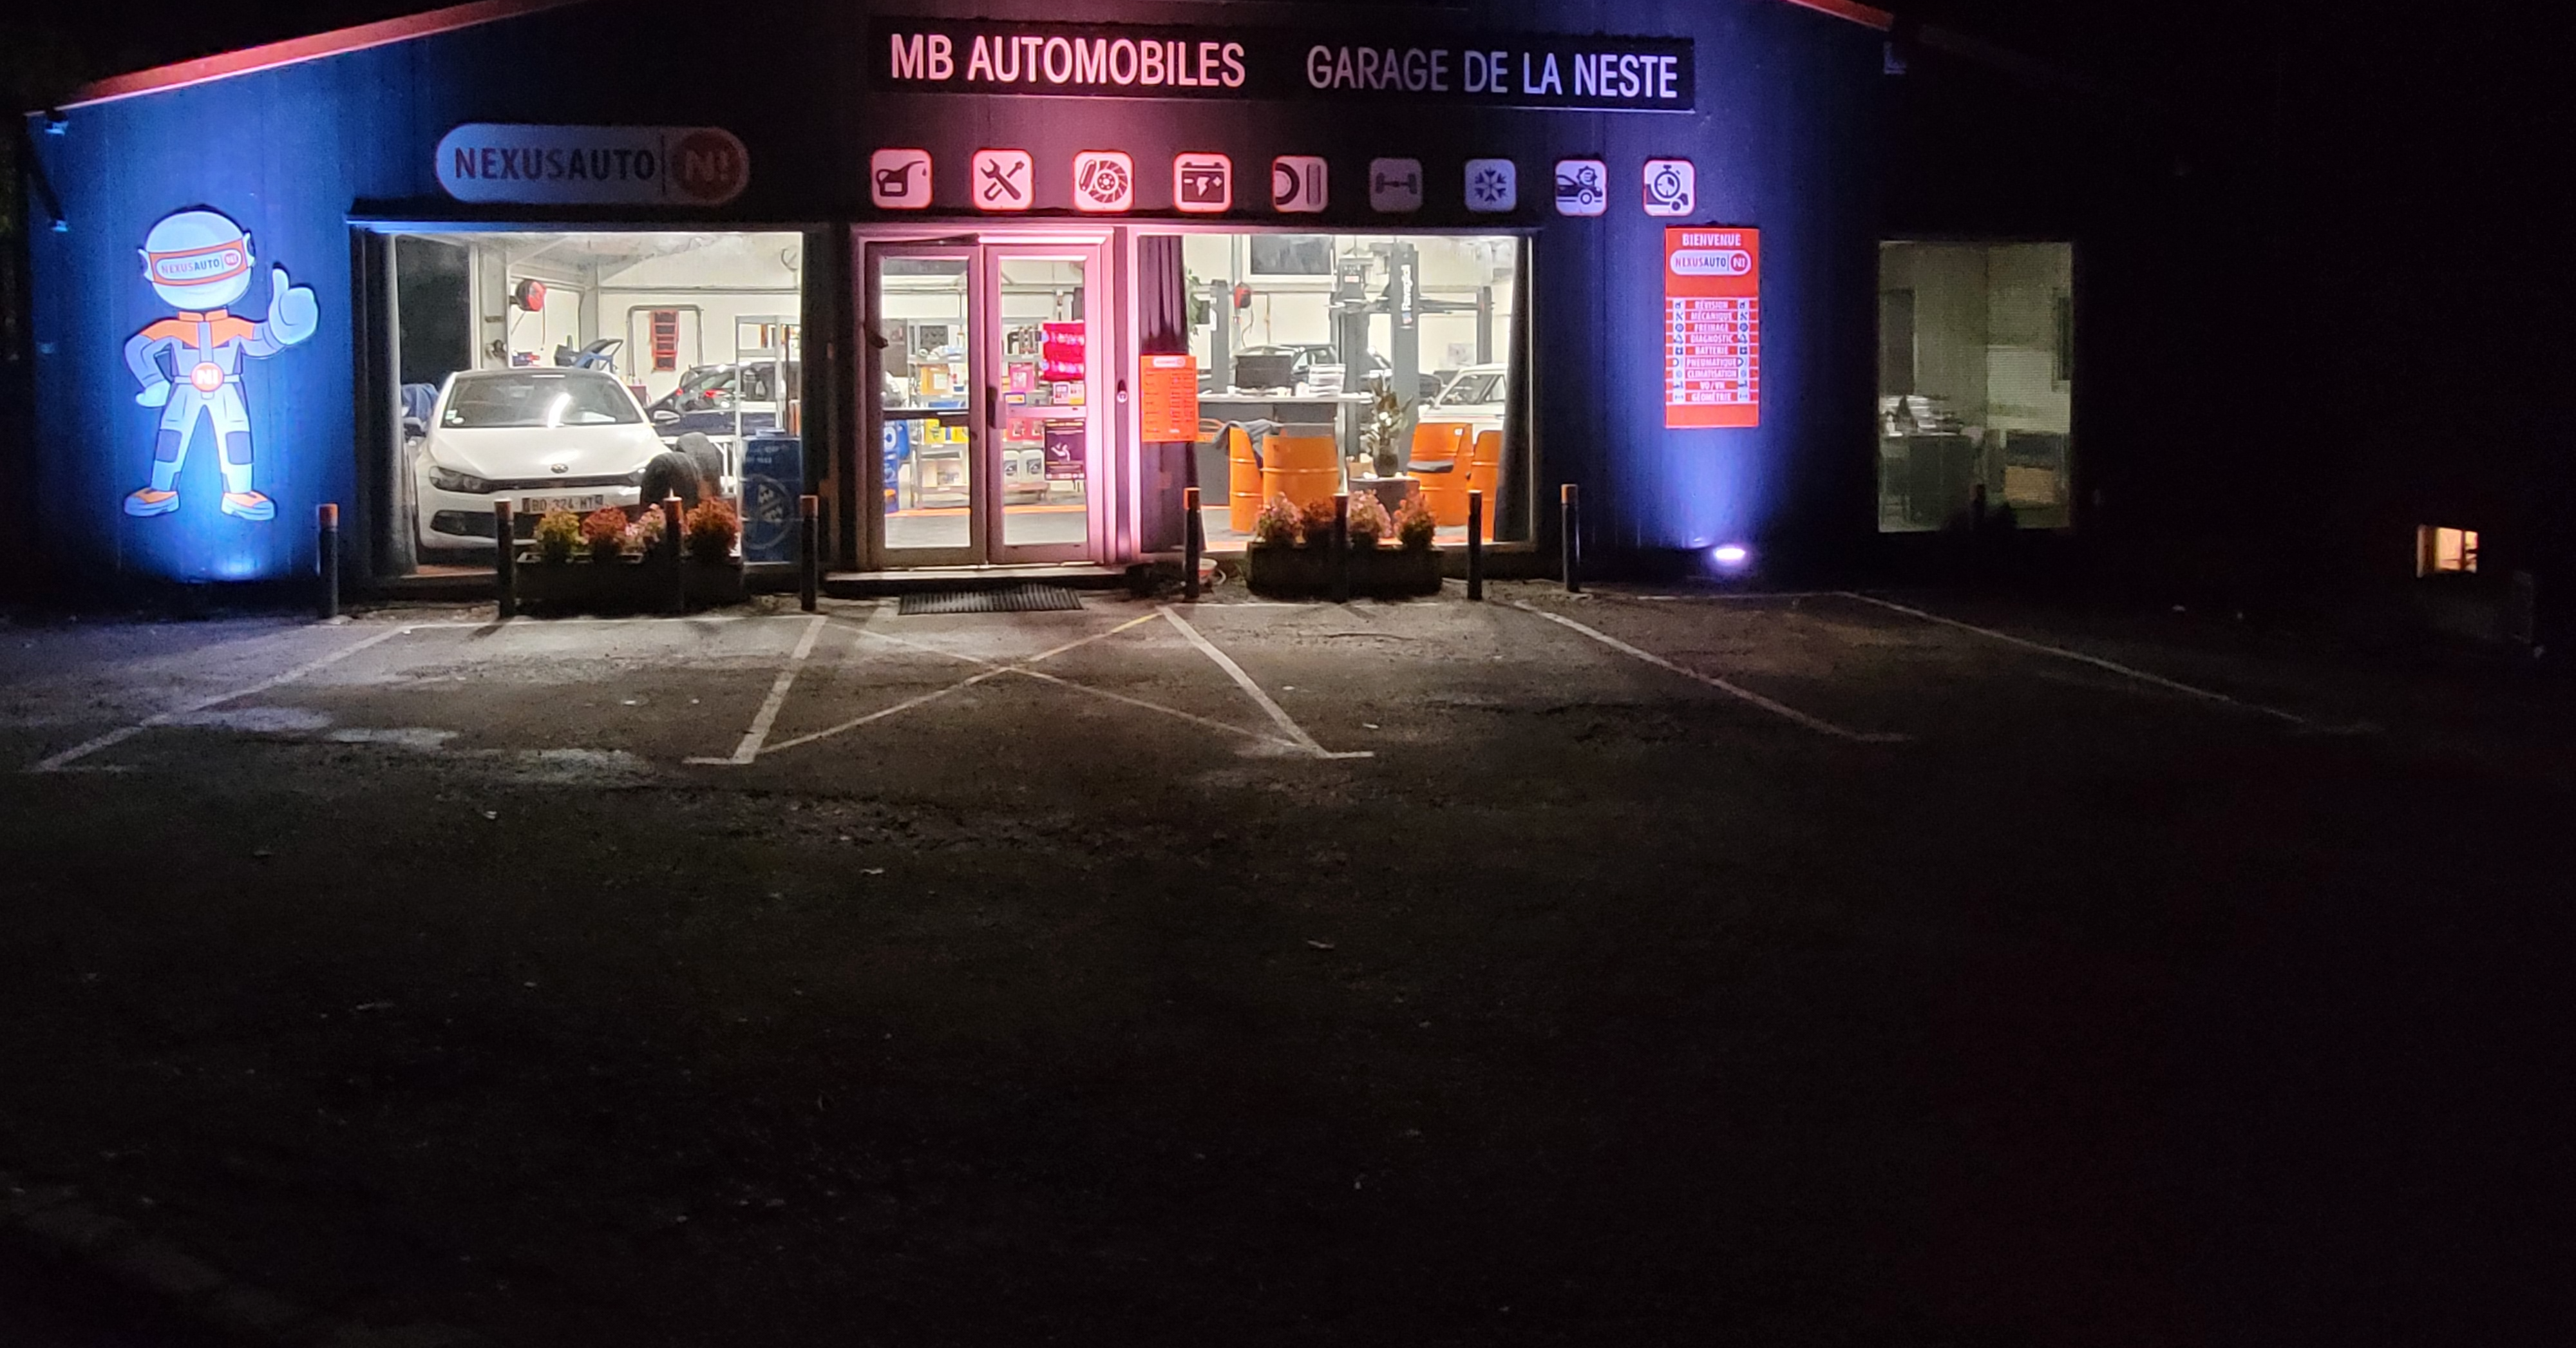 MB AUTOMOBILES GARAGE DE LA NESTE